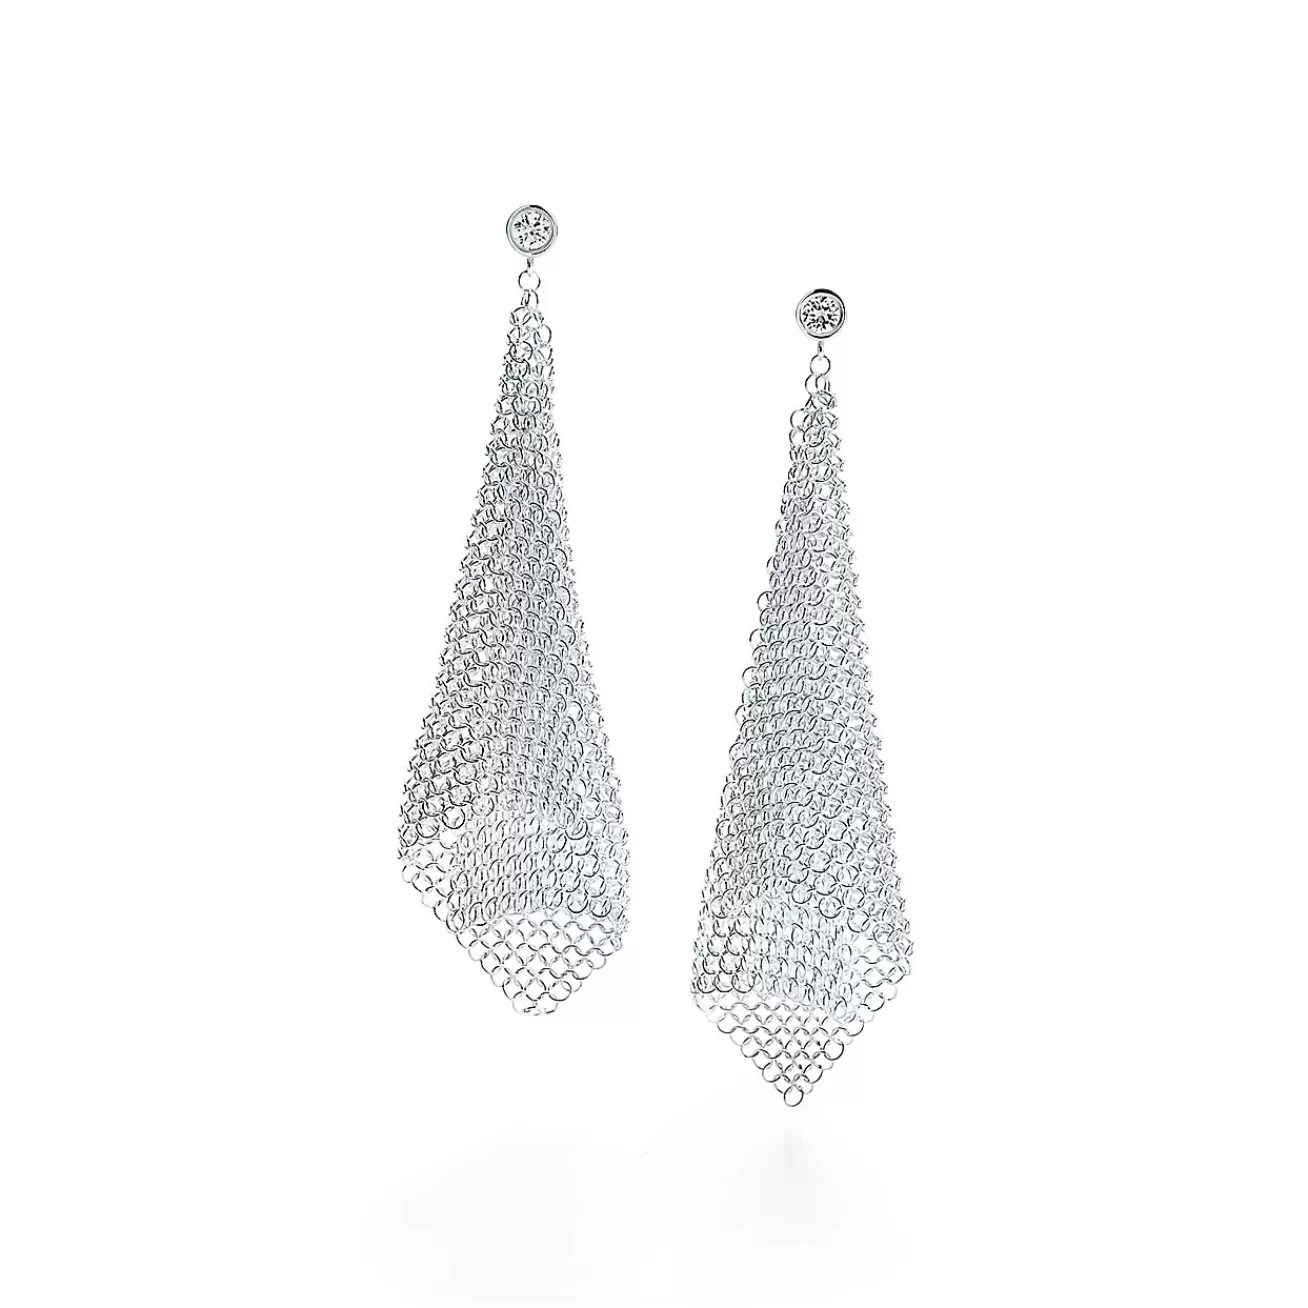 Tiffany & Co. Elsa Peretti® Mesh scarf earrings in sterling silver with diamonds, small. | ^ Earrings | Sterling Silver Jewelry